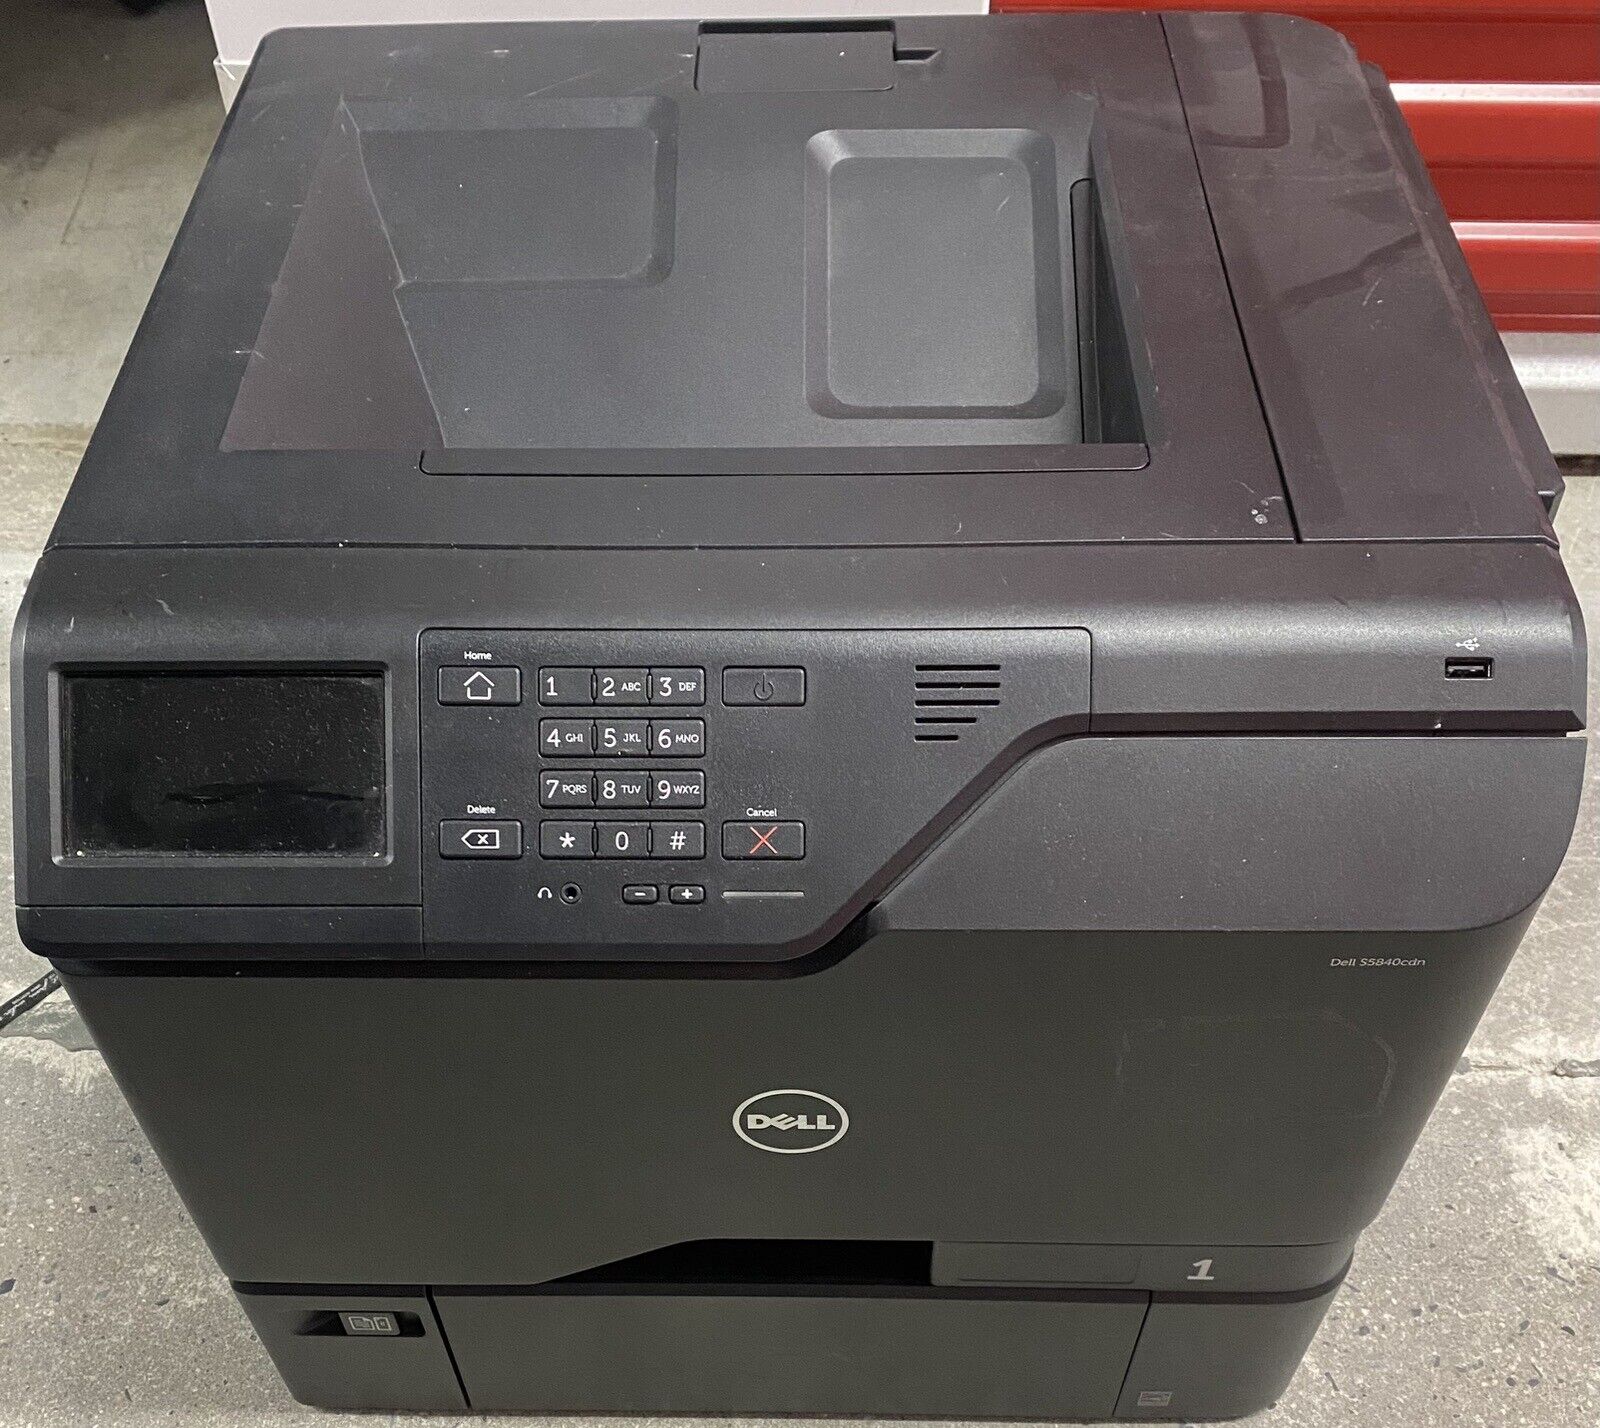 Dell S5840CDN Color Laser Smart Printer AS IS